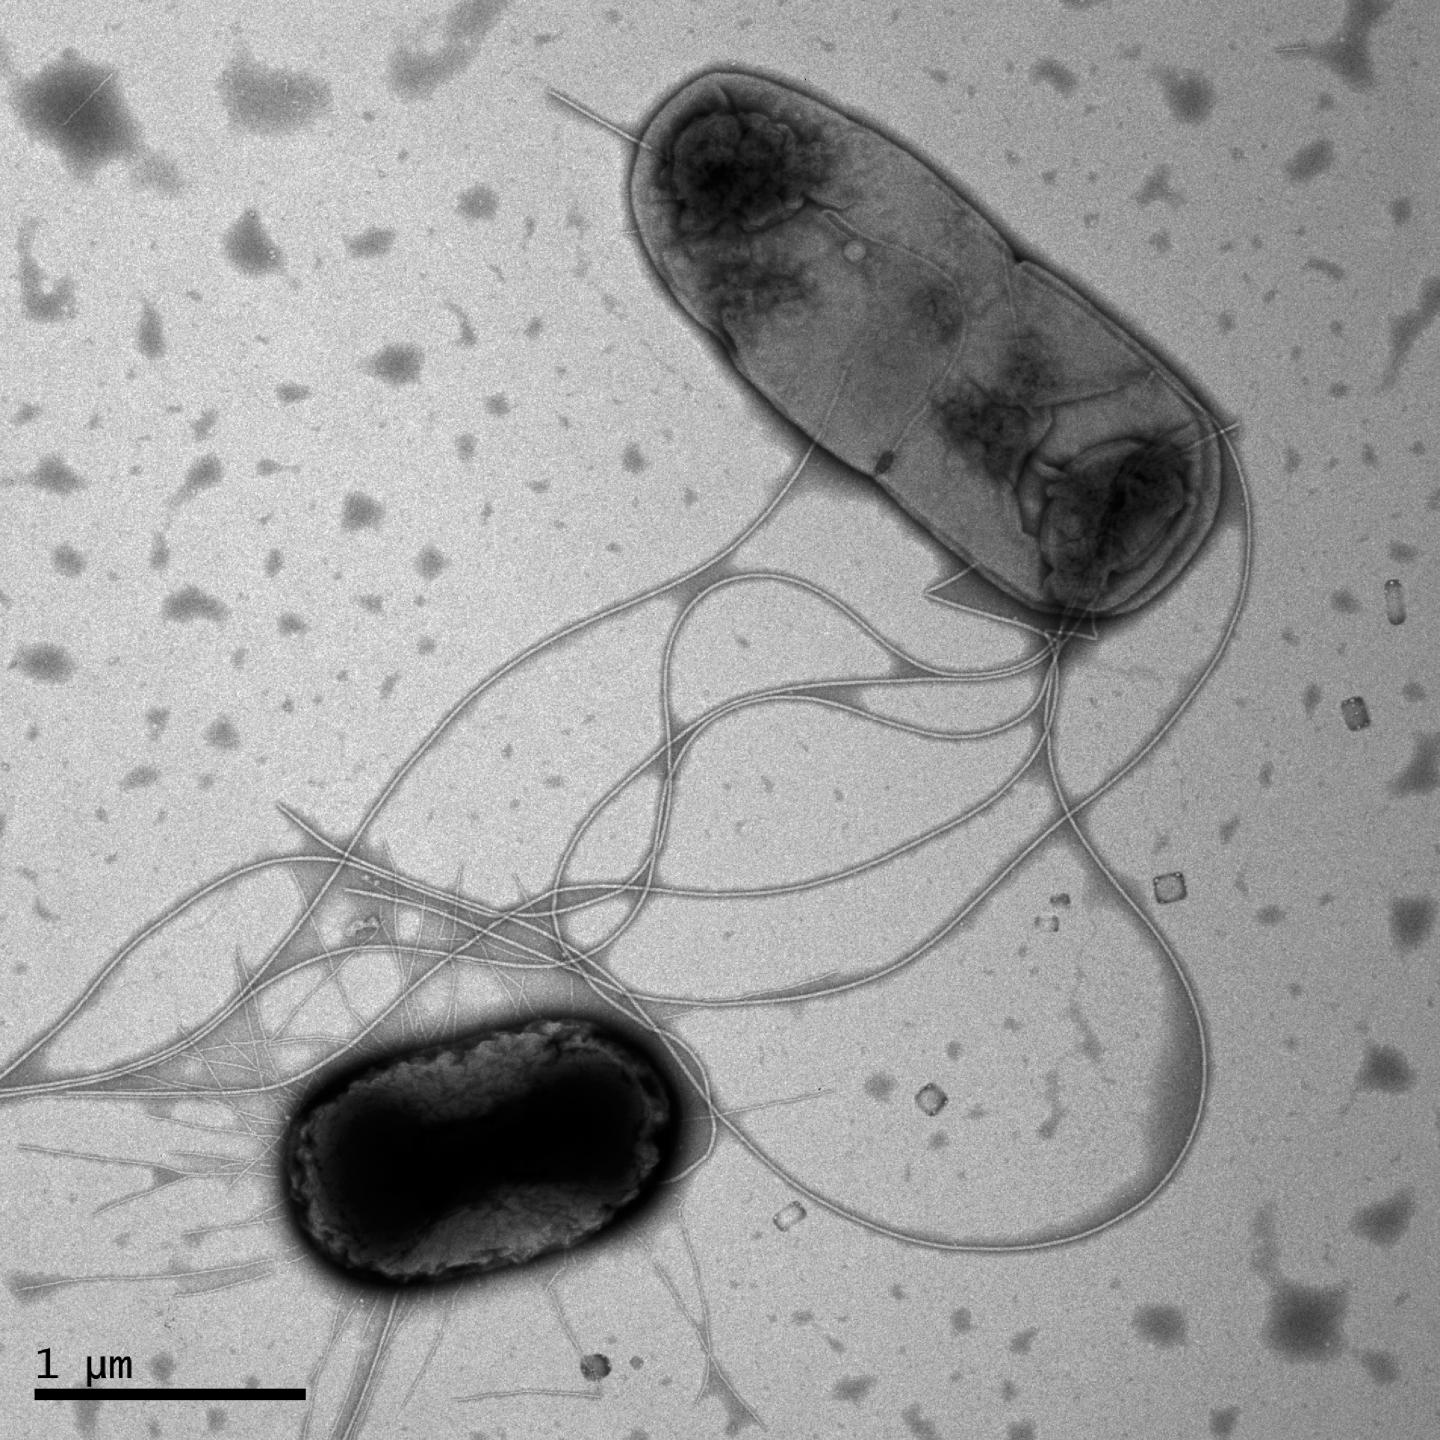 Electron Micrograph of Two Contacting <I>E. coli</I> Bacteria.